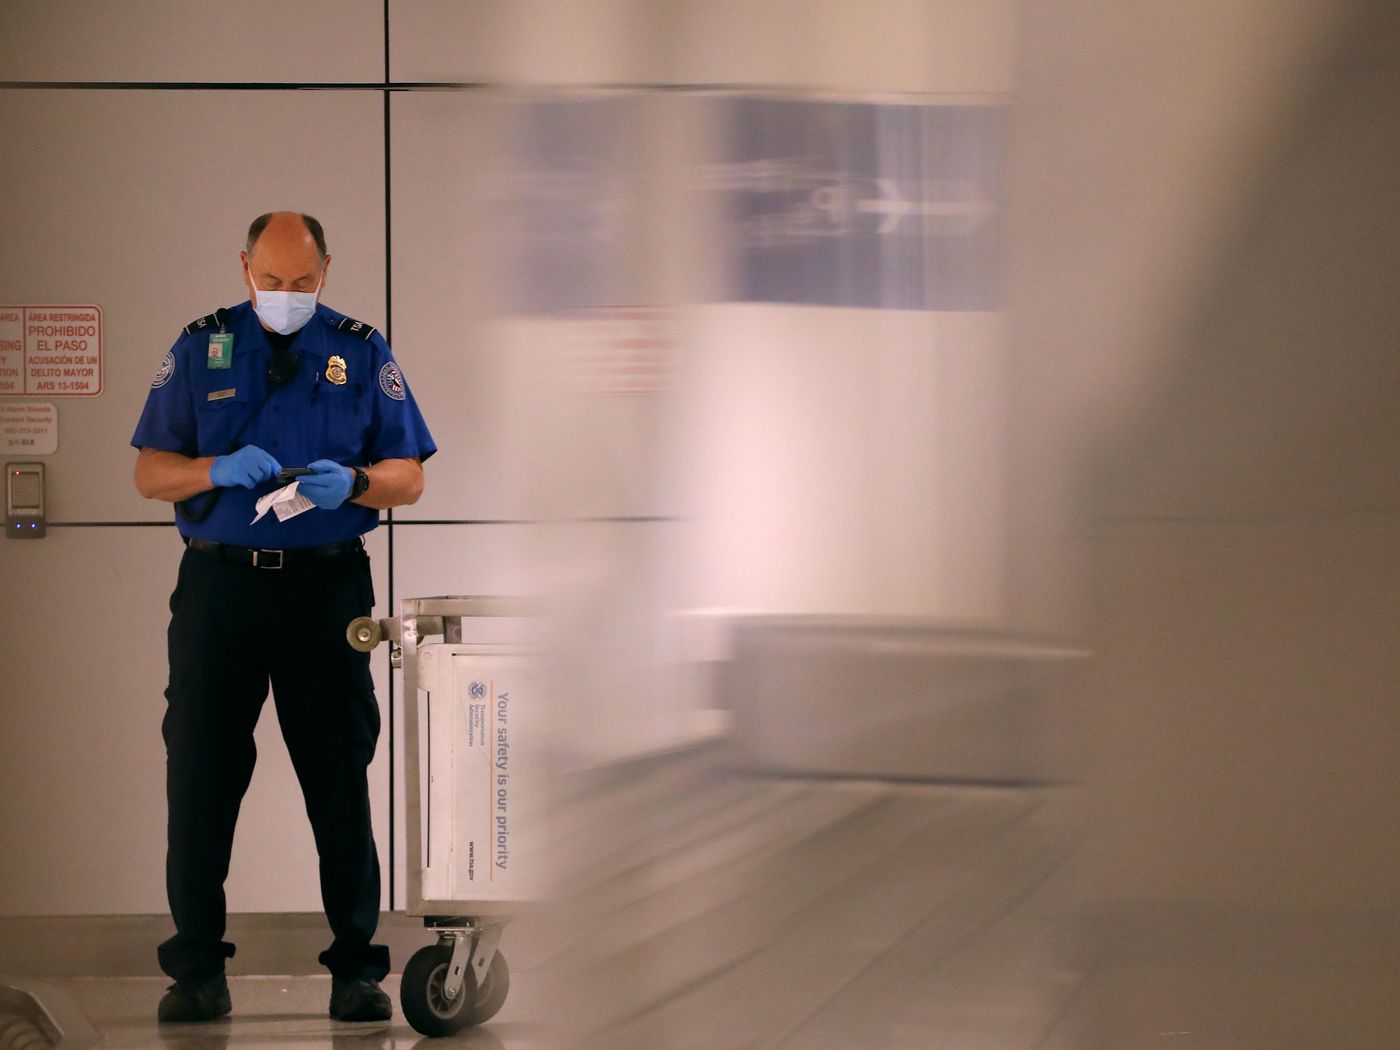 Coronavirus has emptied the airports. TSA agents are still working